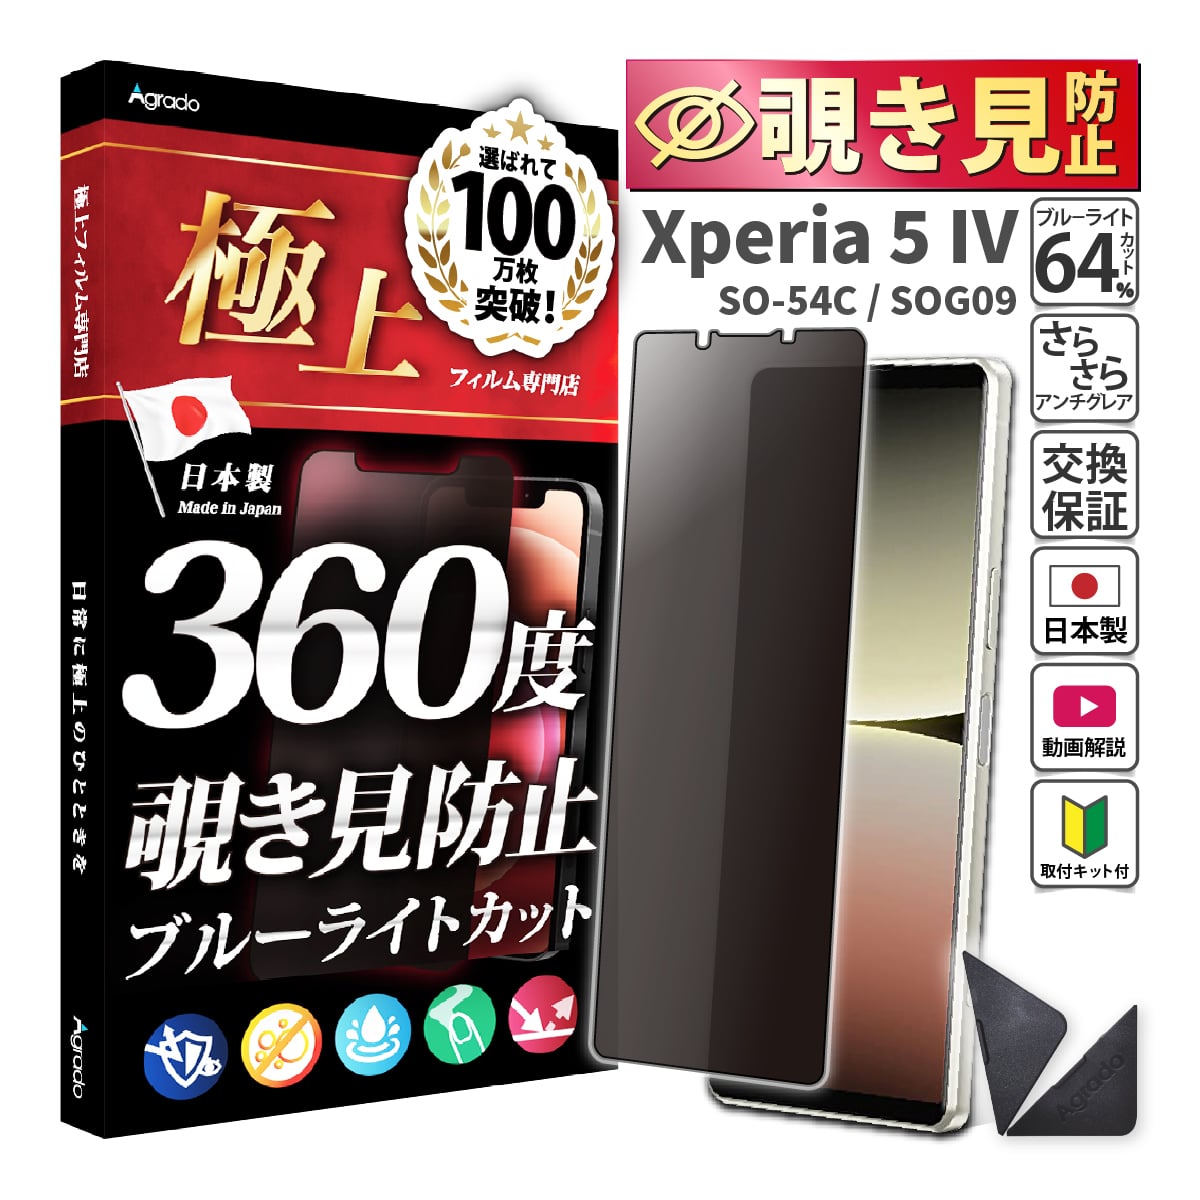 Xperia 5 IV 覗見防止 フィルム 360度 Xperia 5 4 ブルーライト フィルム 覗き見防止 保護フィルム さらさら 極上 SO-54C SOG09 ケース 干渉しない 除き見防止